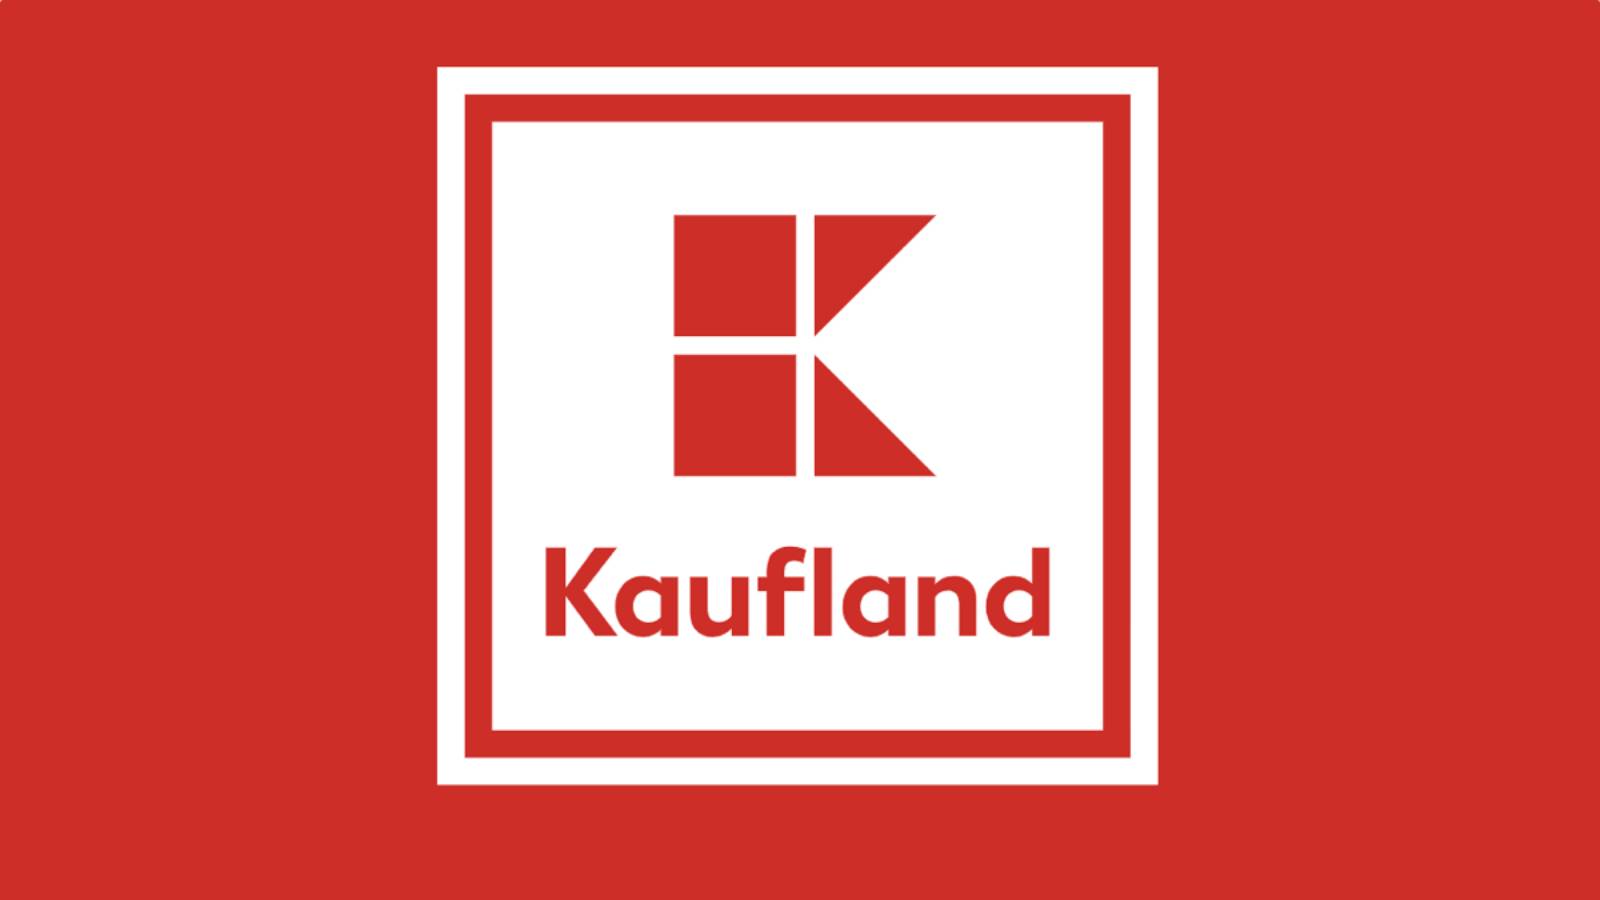 El poder de Kaufland